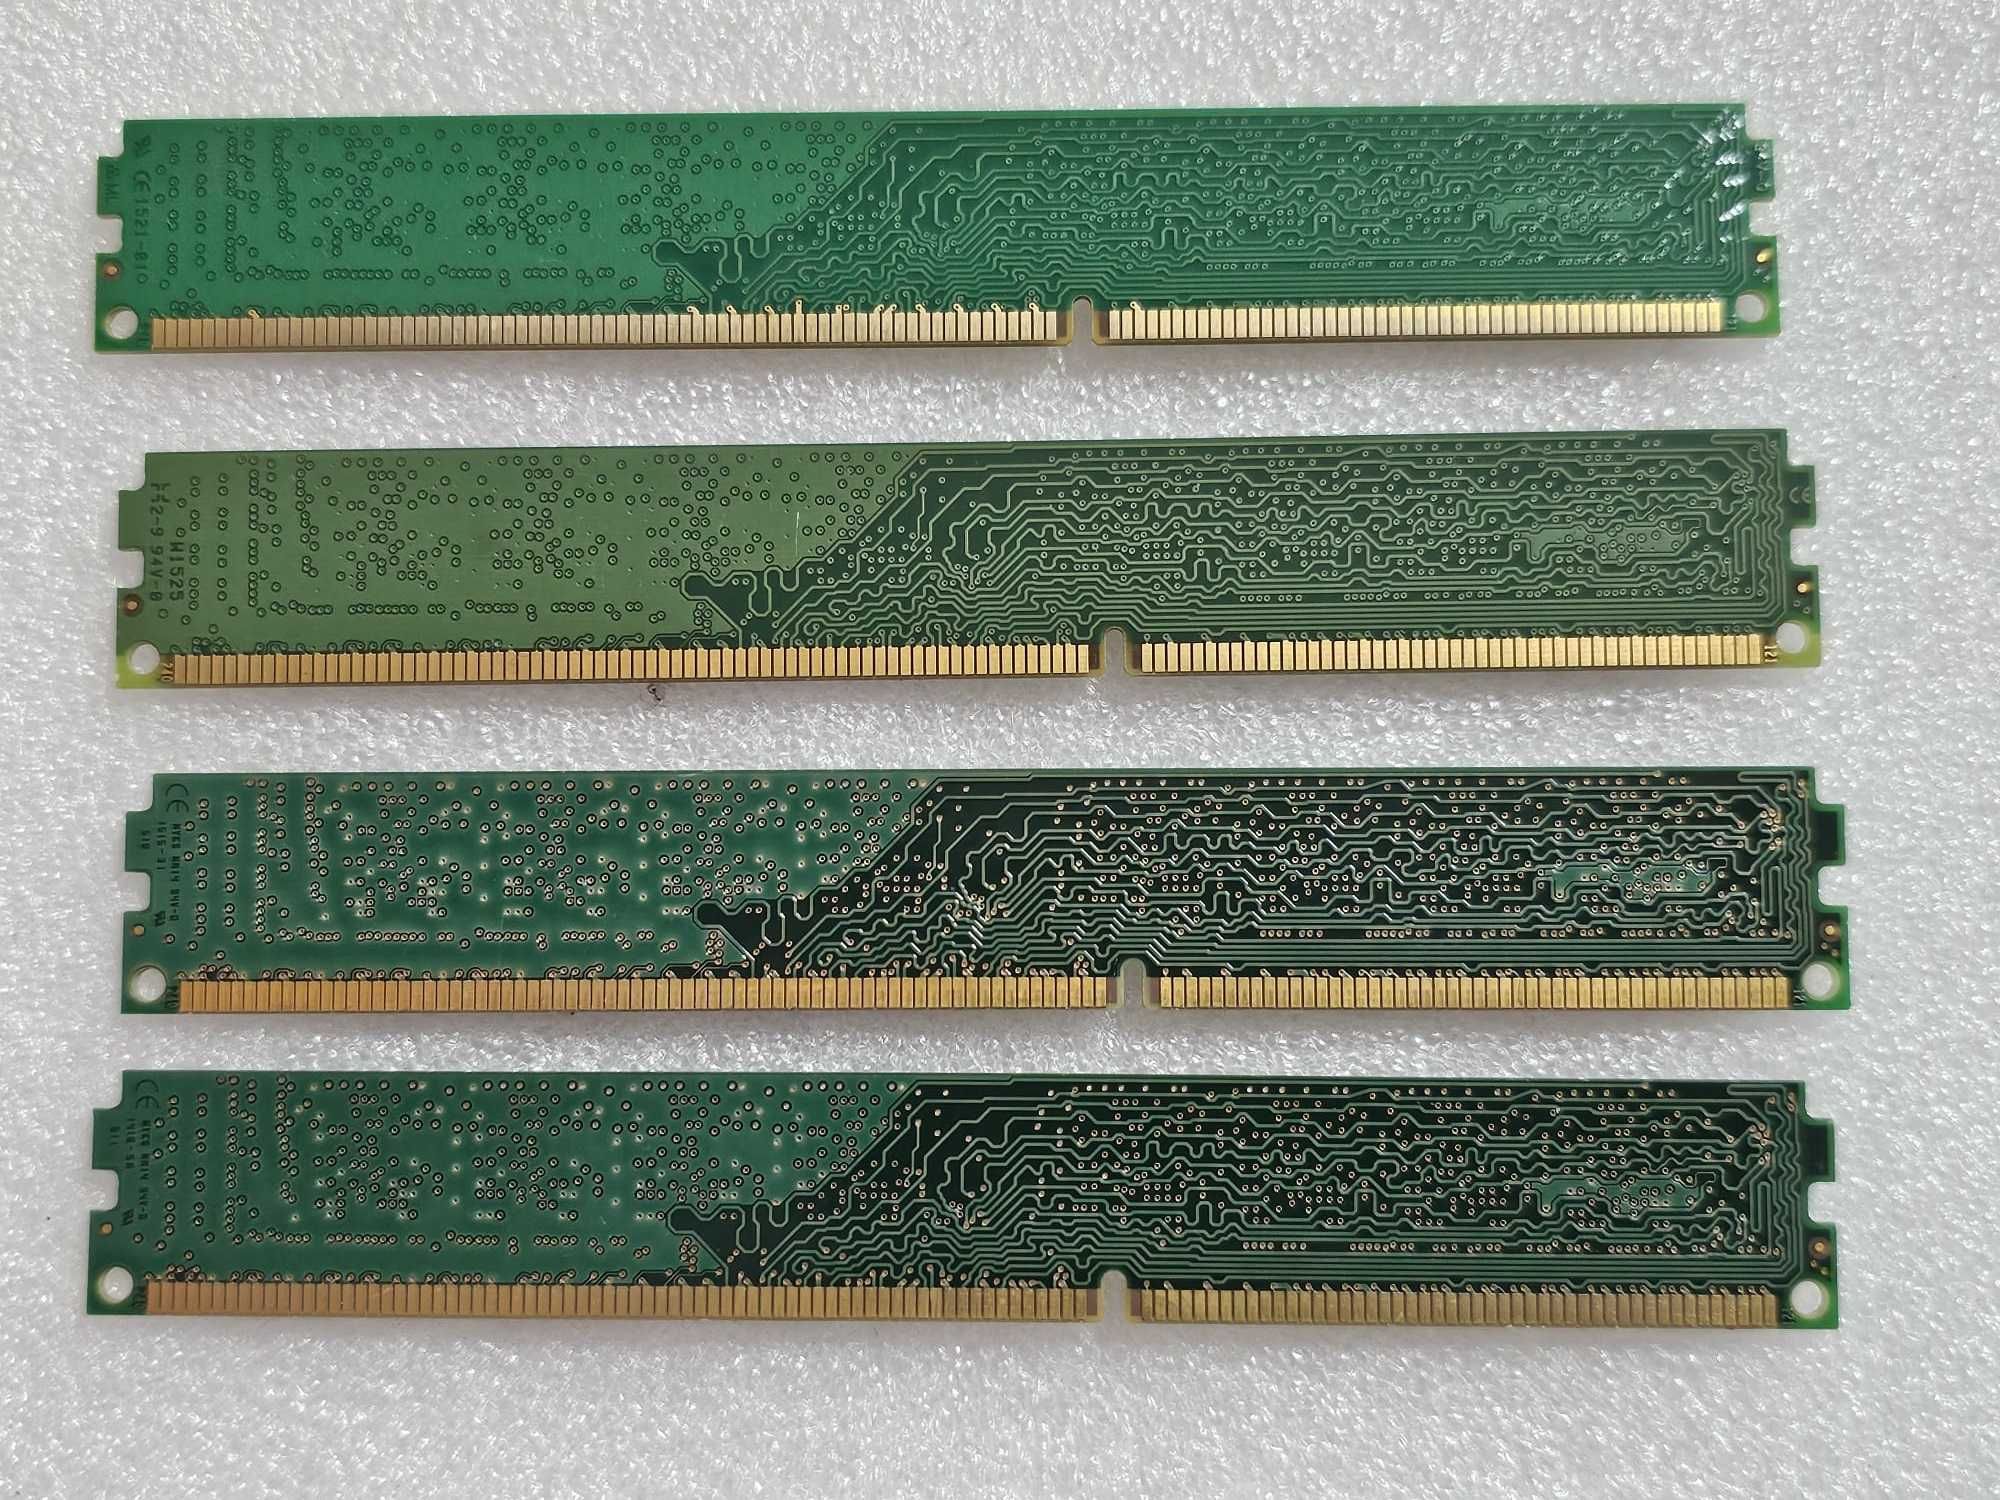 Memorie Kingston KVR13N9S8/4 ValueRAM 4GB DDR3 1333 MHz CL9